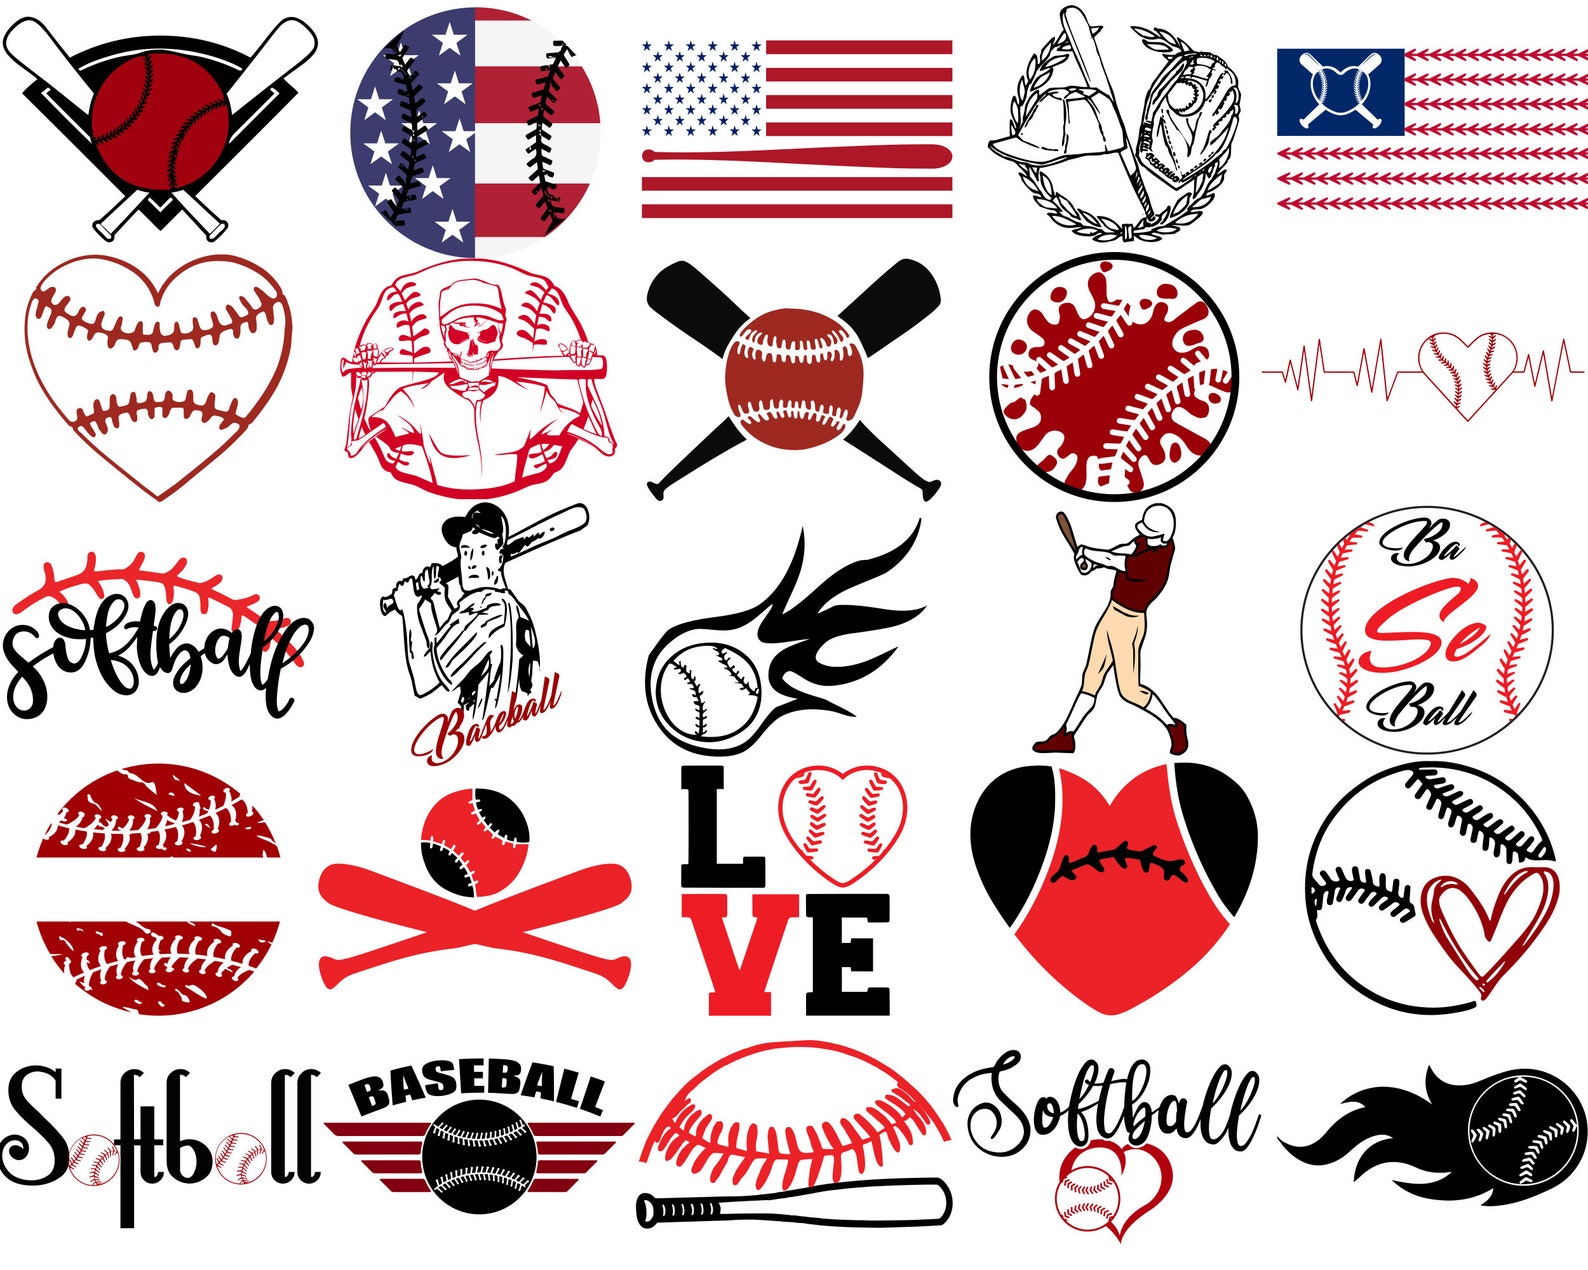 Diverse of baseball symbols.